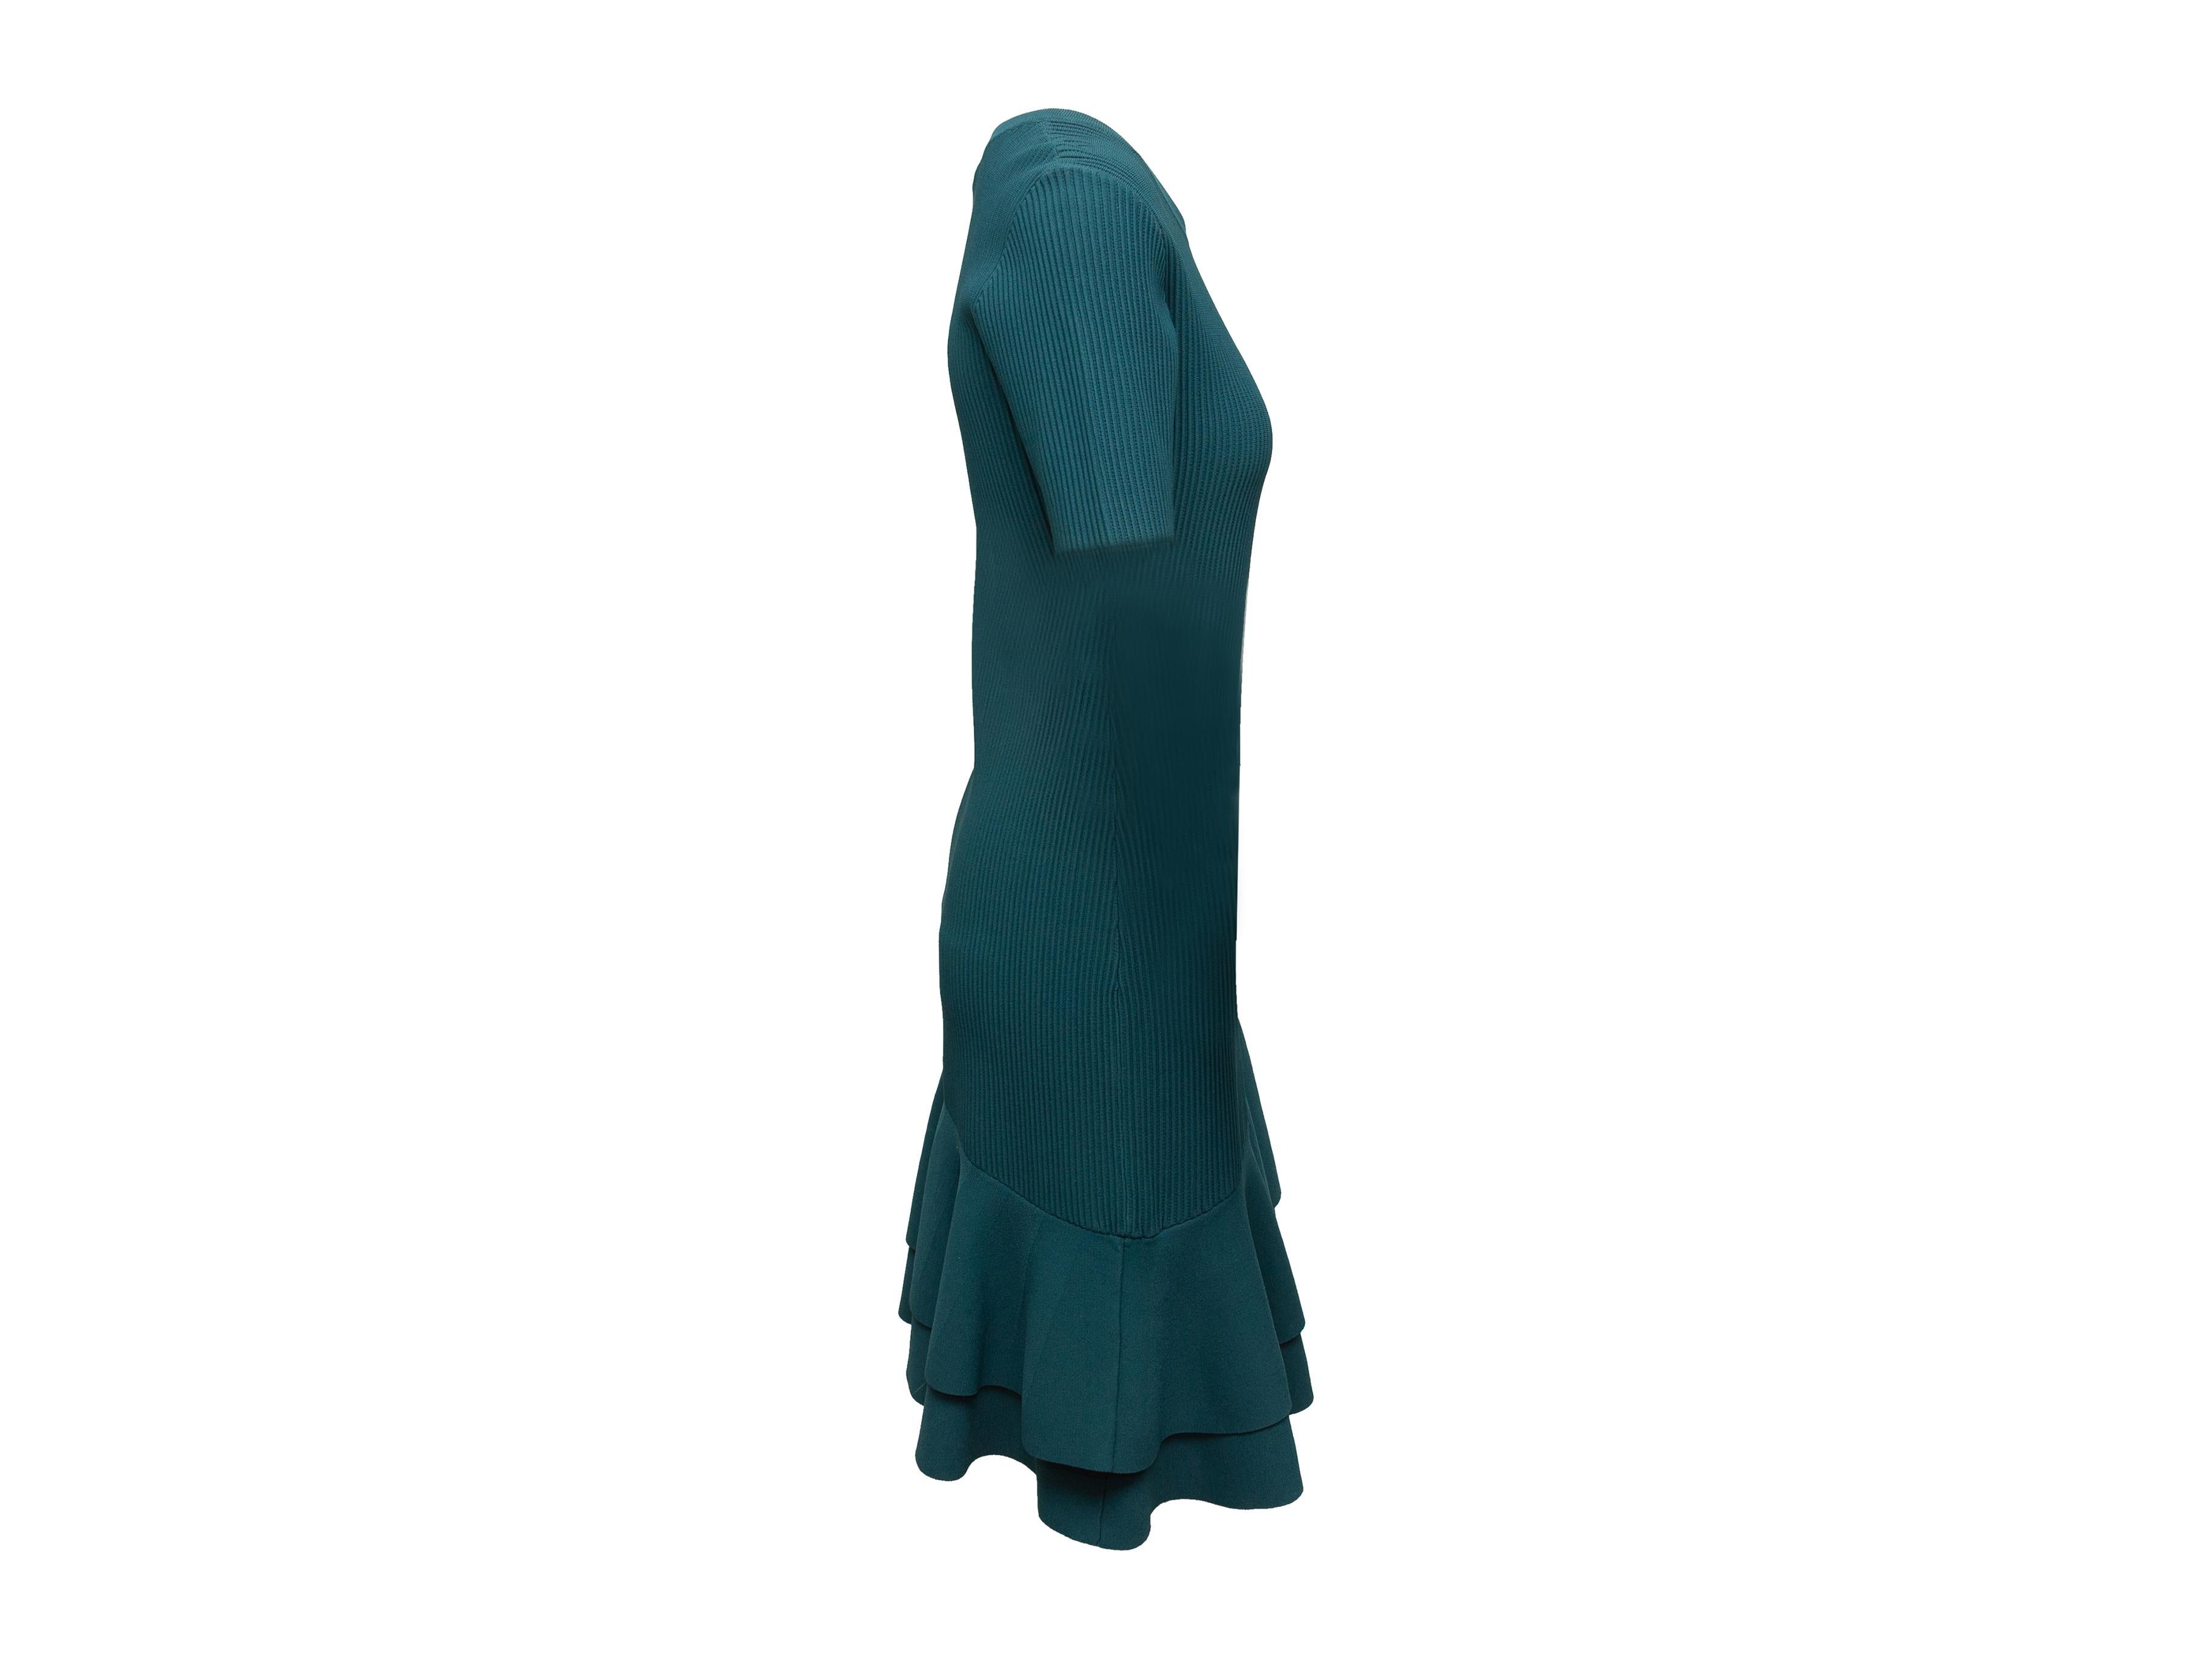 Product details: Teal rib knit dress by Diane Von Furstenberg. Crew neck. Short sleeves. Asymmetrical ruffle hem. 29